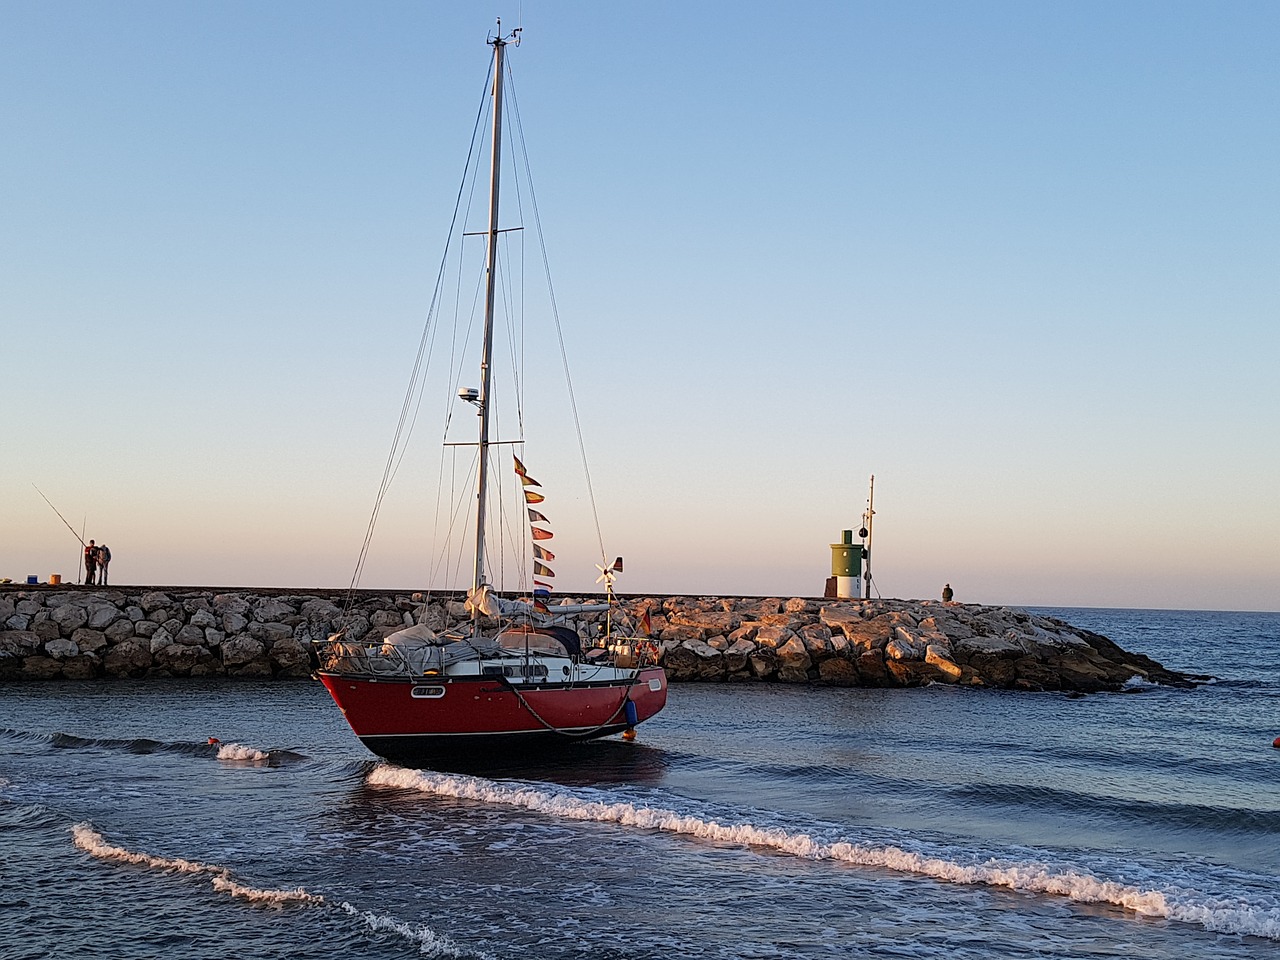 dawn run aground sailboat free photo